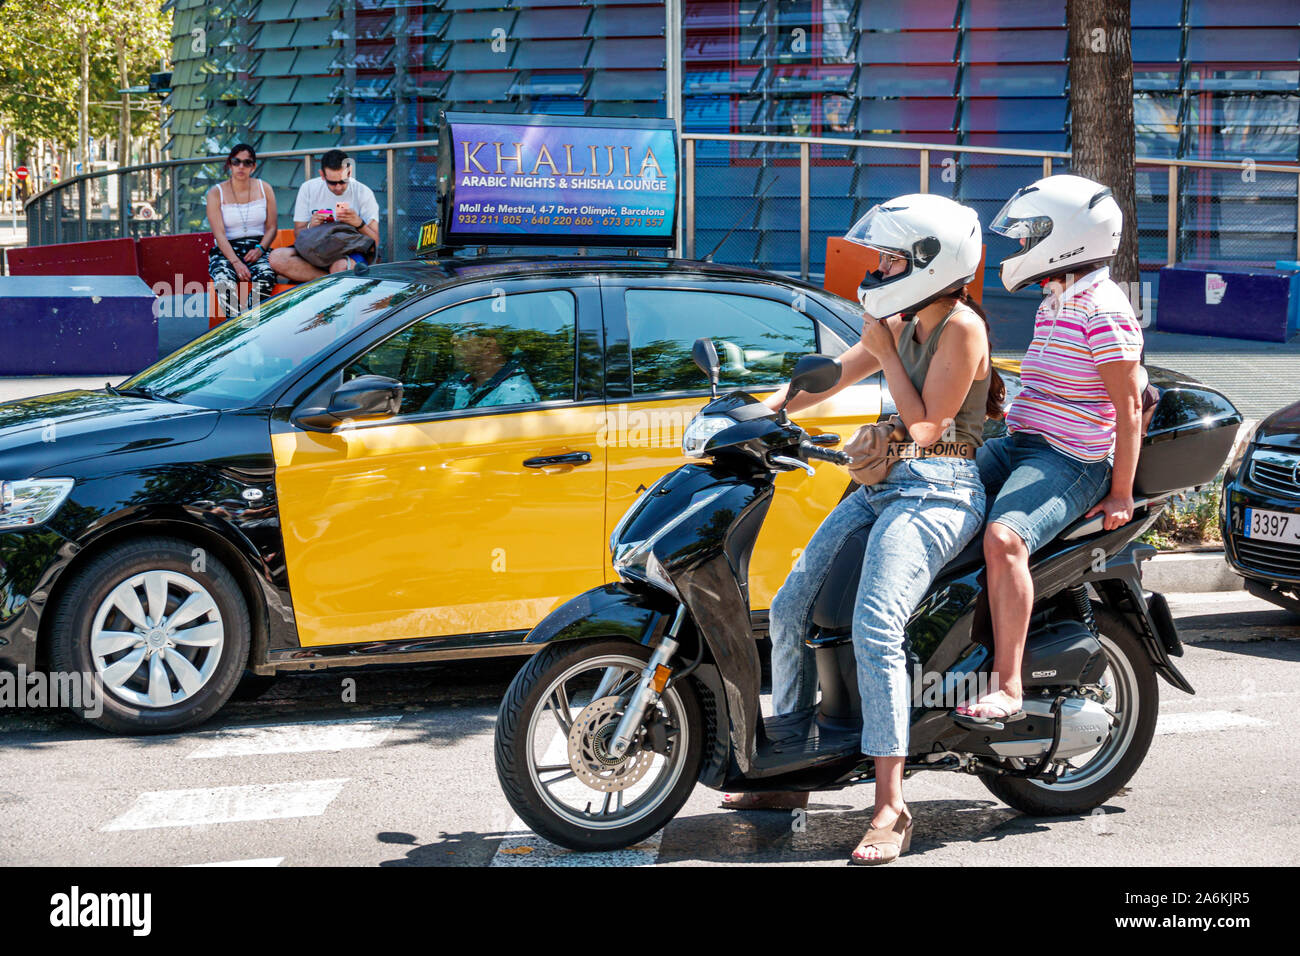 Barcelone Espagne,Catalogne Catalunya,El Poblenou,Avinguda Diagonal,avenue,trafic,femme femme femme femme femme adulte,moto moto moto,St Banque D'Images